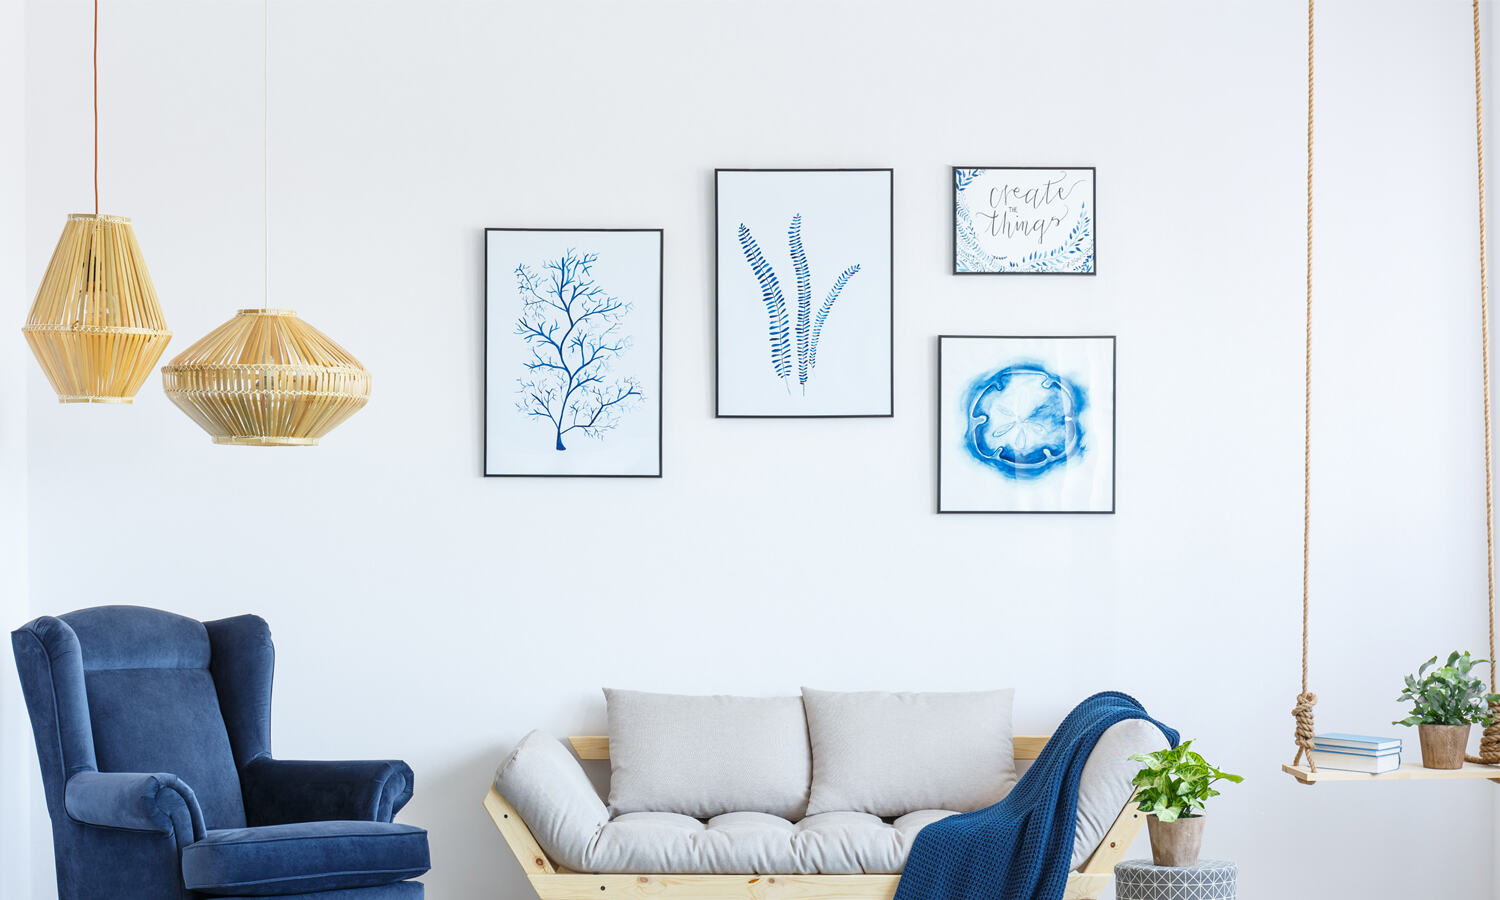 10 Trending Living Room Wall Decor Ideas, 2021